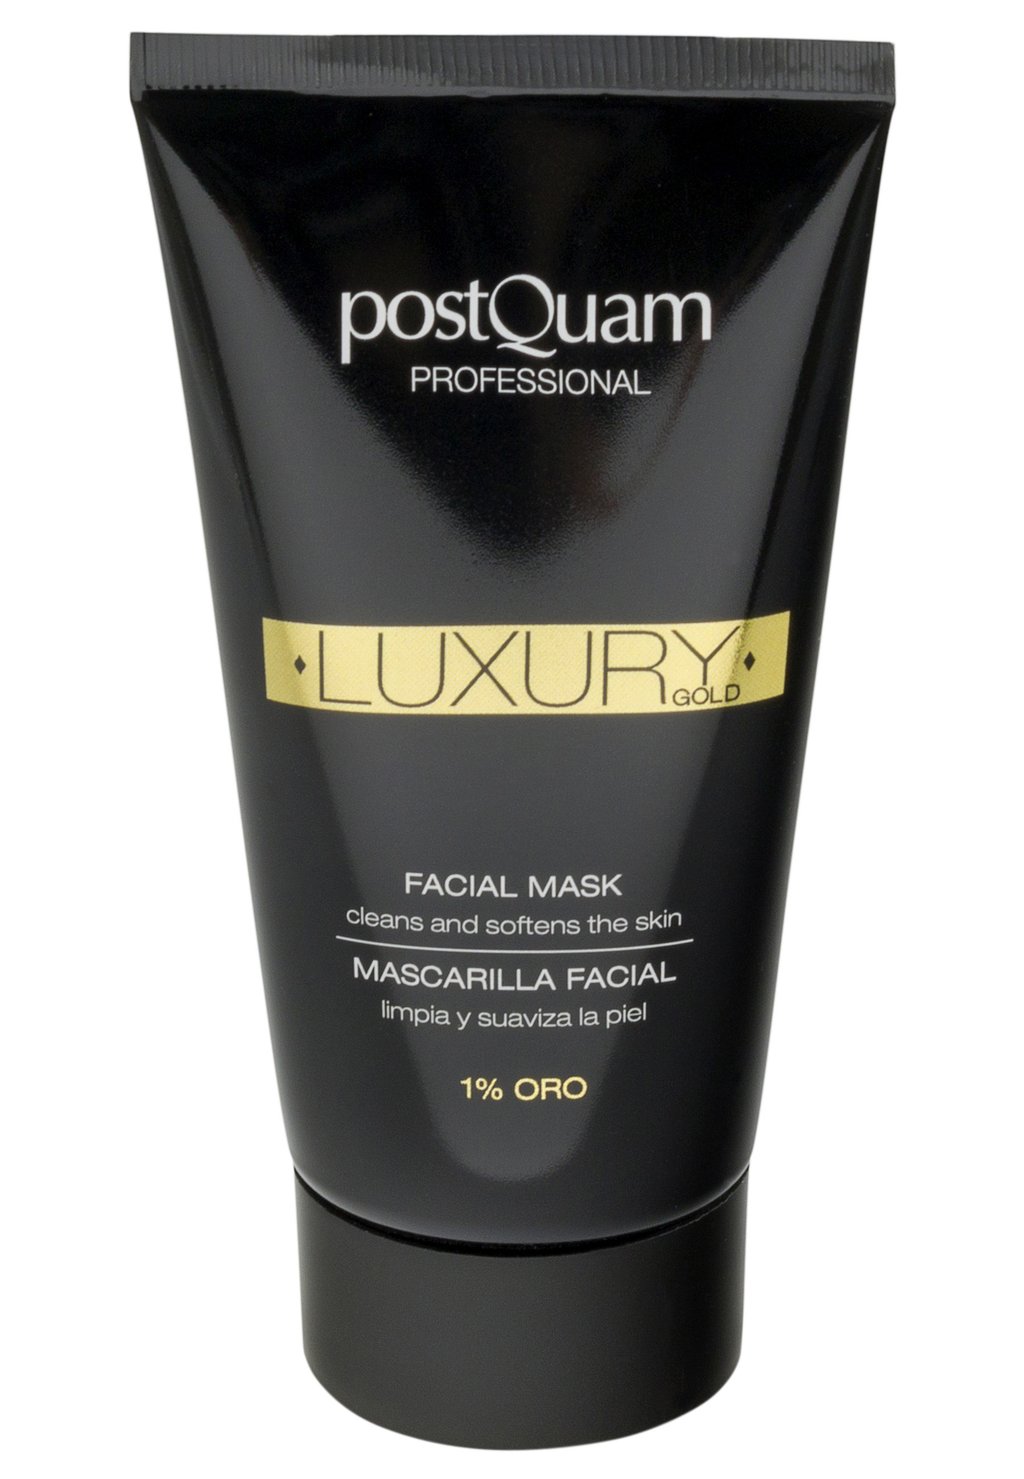 Маска для лица Skin Care Luxury Gold Facial Mask 75Ml PostQuam маска для лица 75 мл postquam mascarilla facial luxury gold